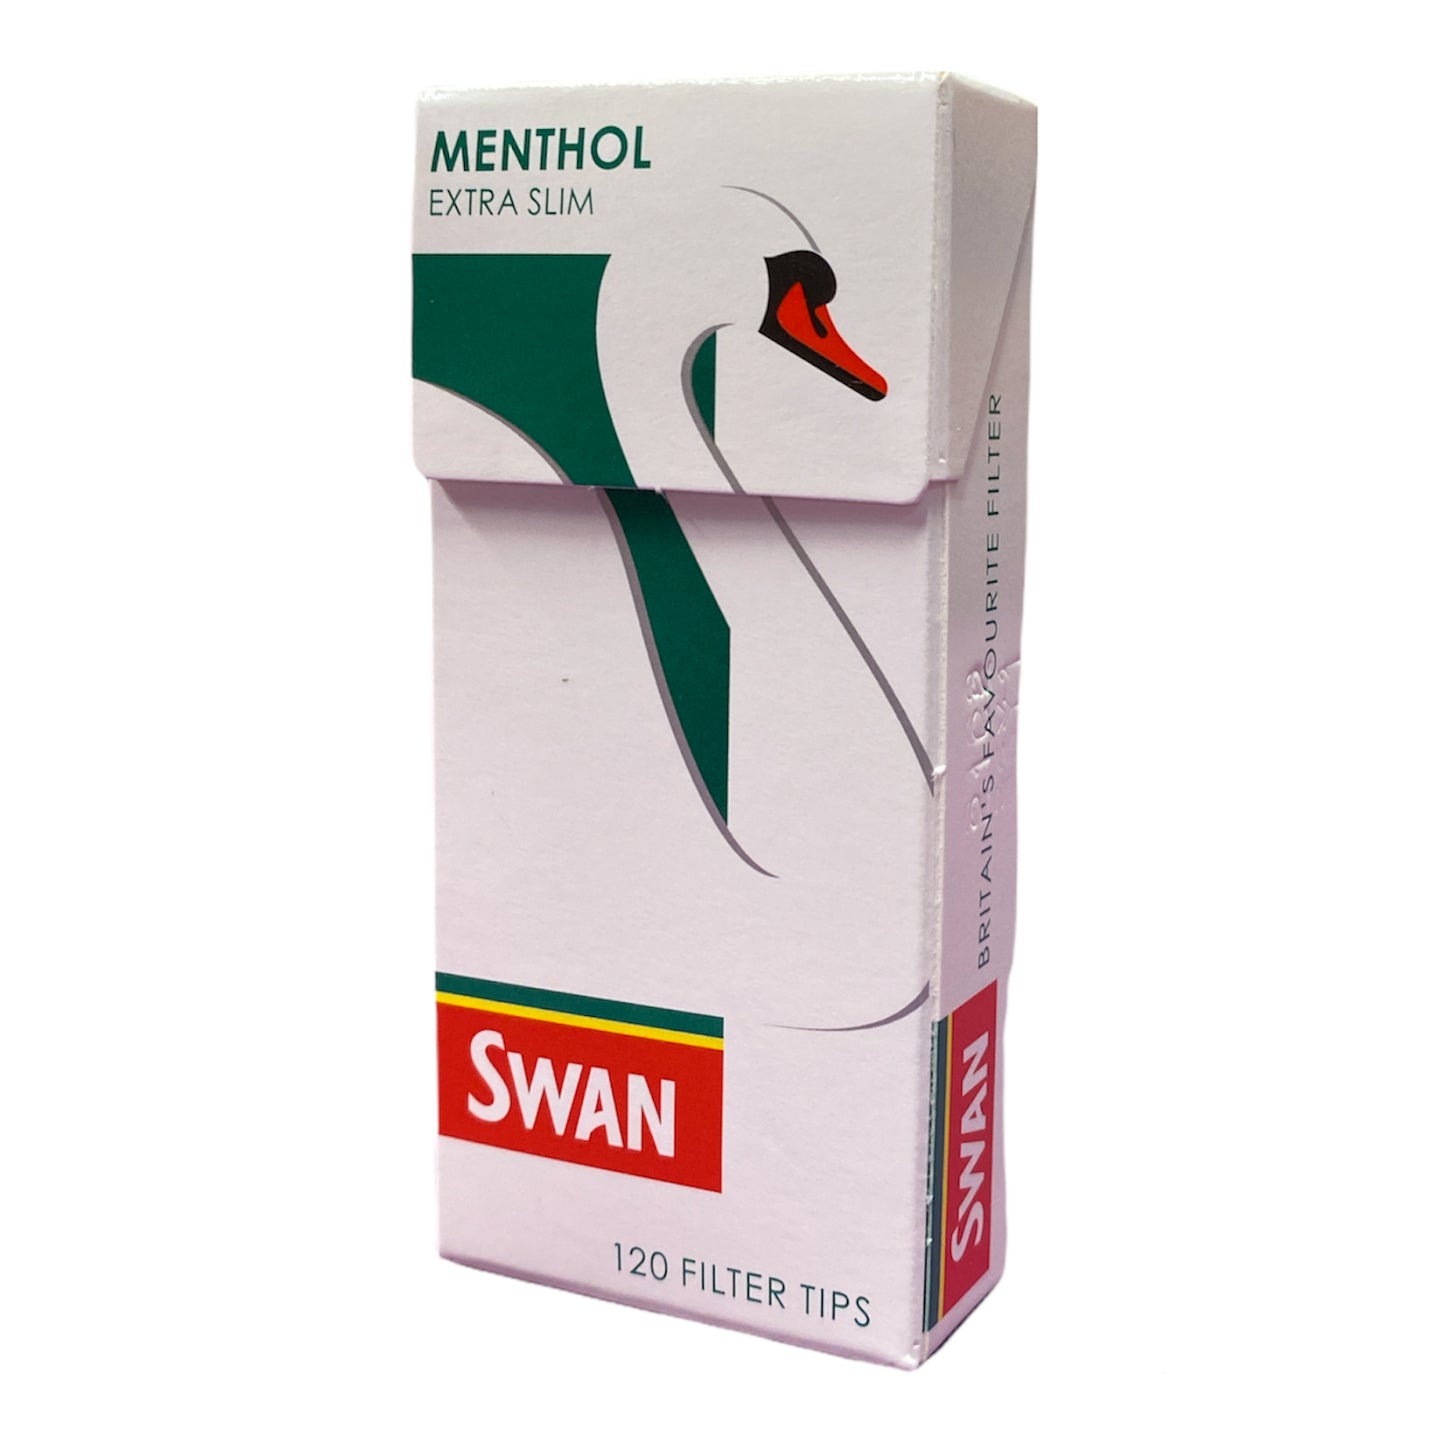 Swan Menthol